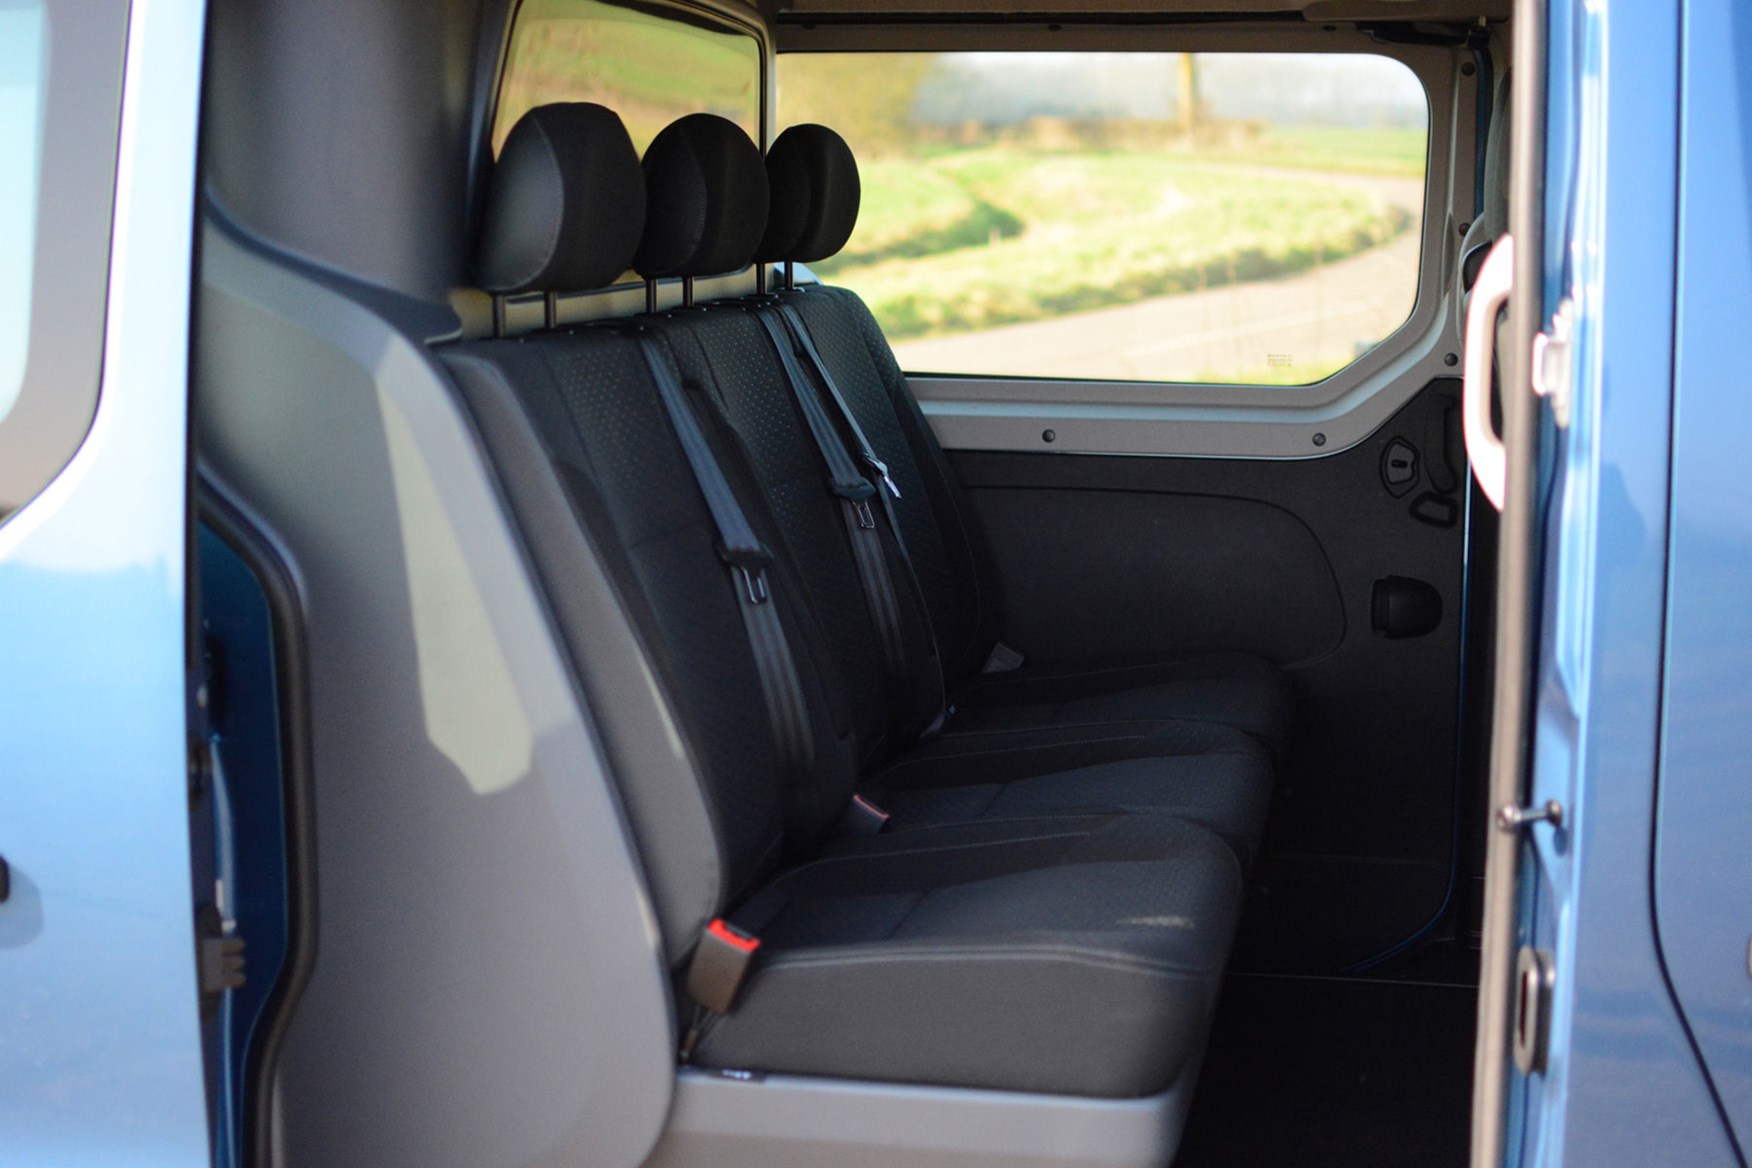 Vauxhall Vivaro Doublecab Sportive review - rear seats